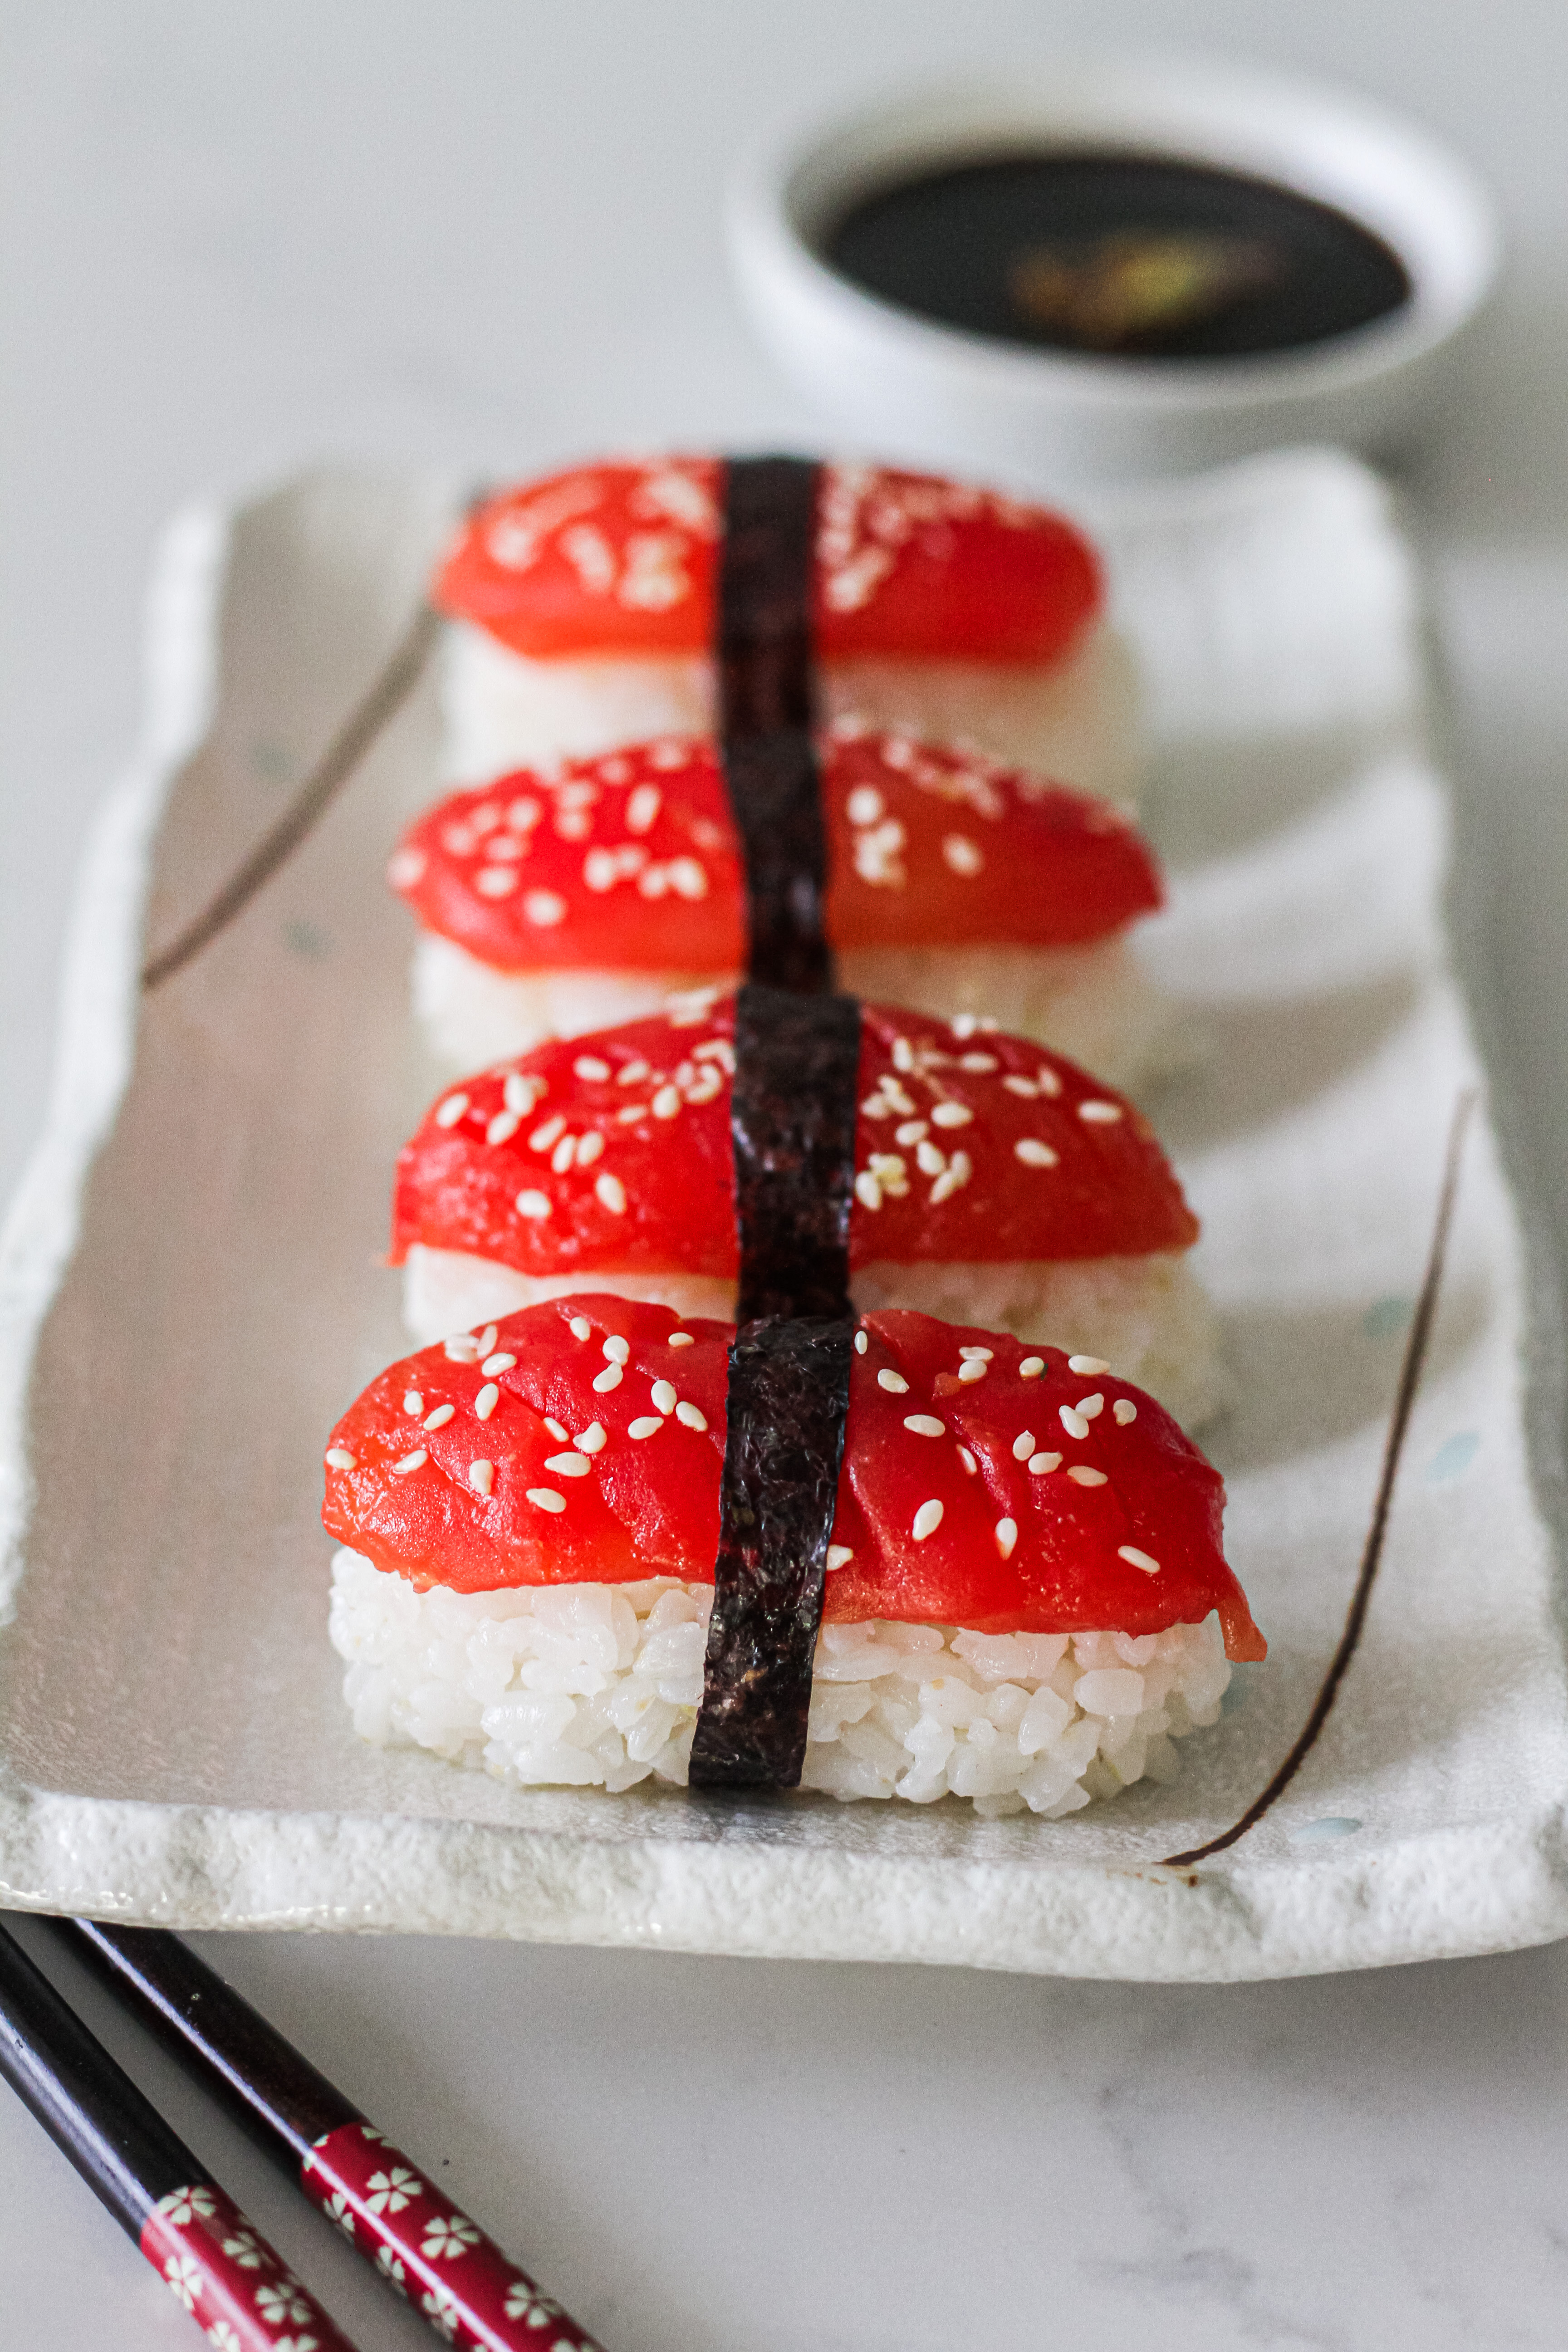 How to make sushi at home - La Reserva Blog